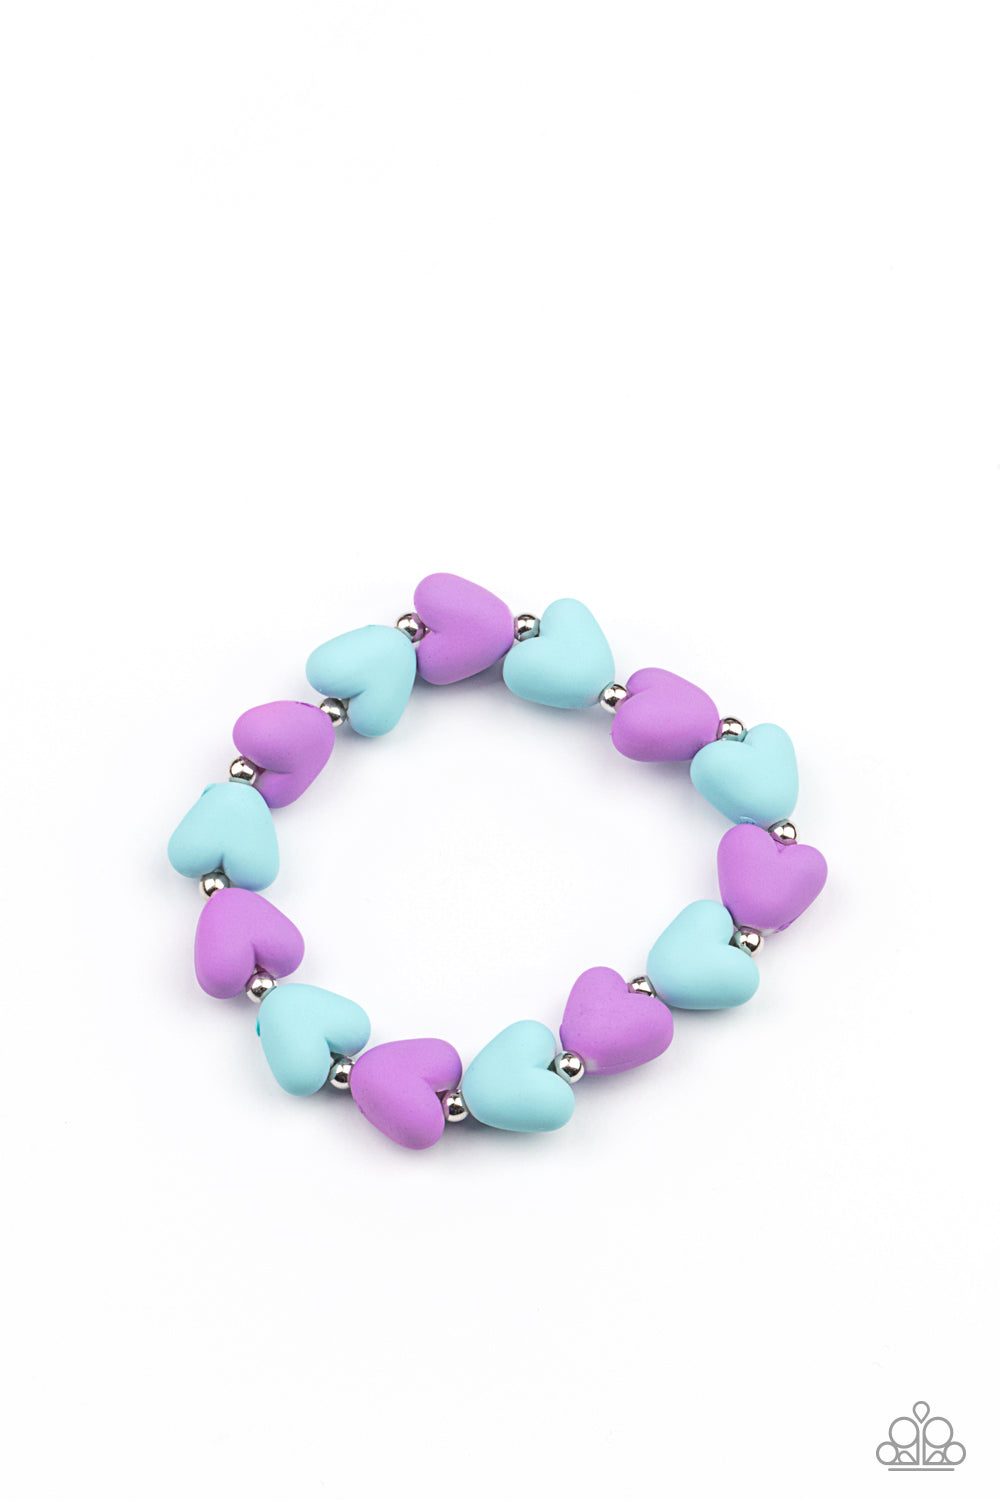 Starlet Shimmer Blue, Purple, White Stretchy Bracelet